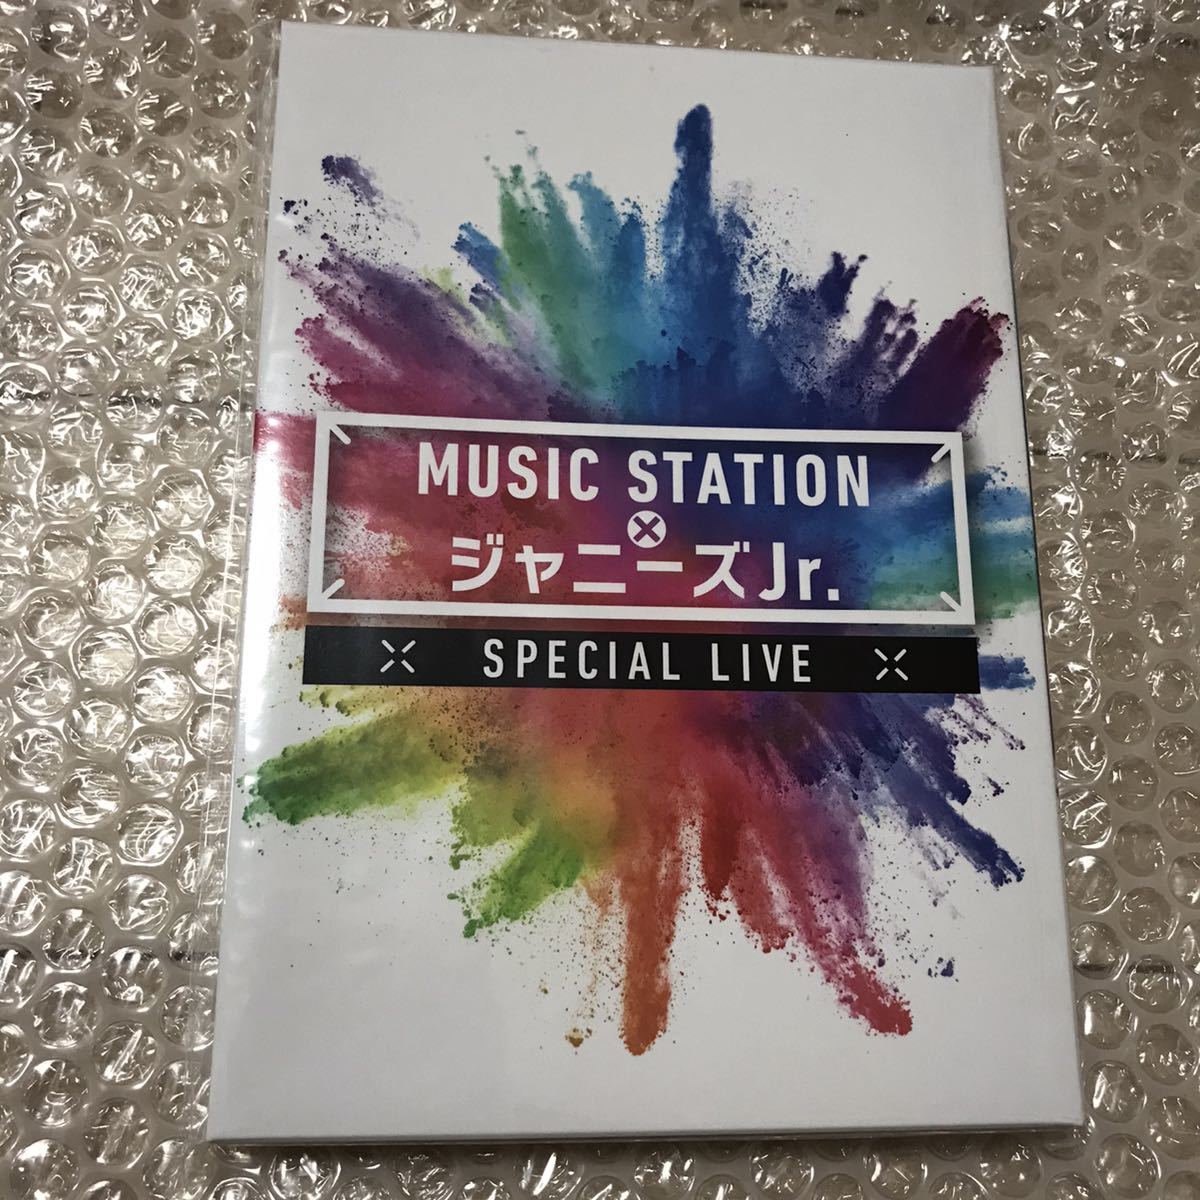 music station ジャニーズjr DVD Travis Japan HiHi Jets 美少年 7 MEN 